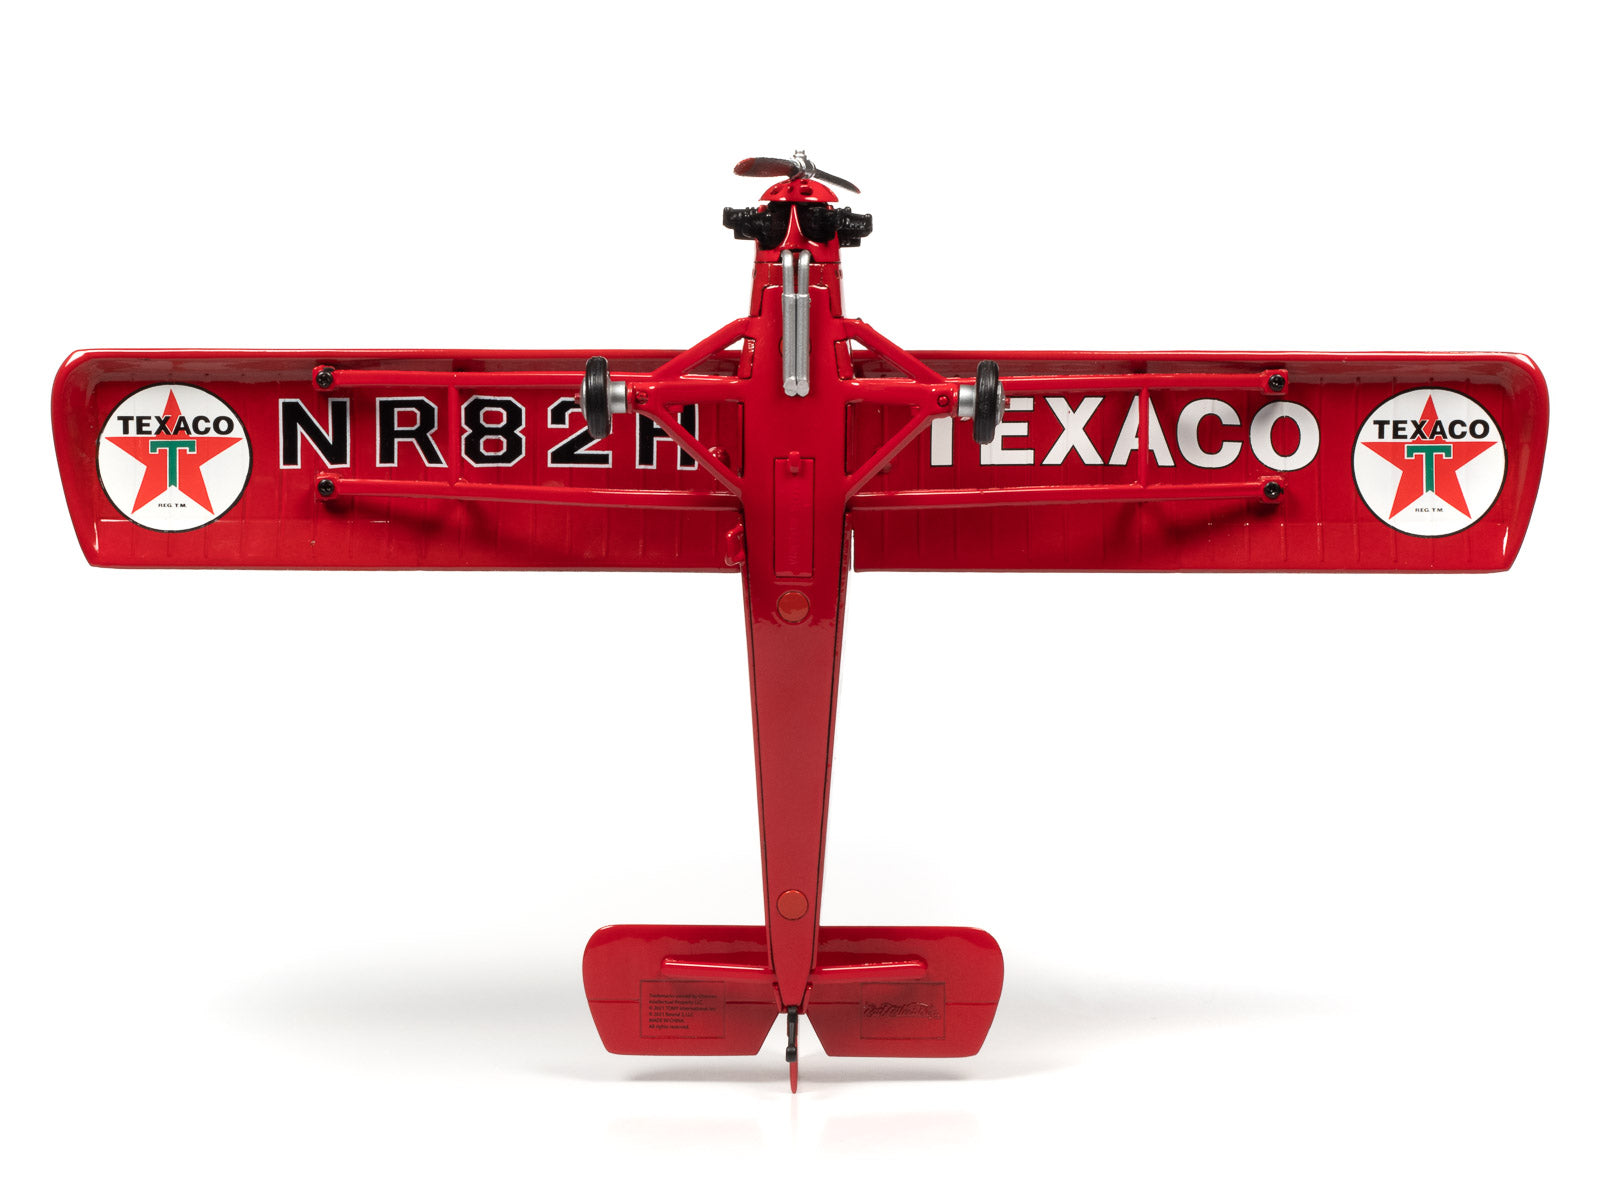 Texaco 1929 Curtiss Robin Airplane Regular Edition